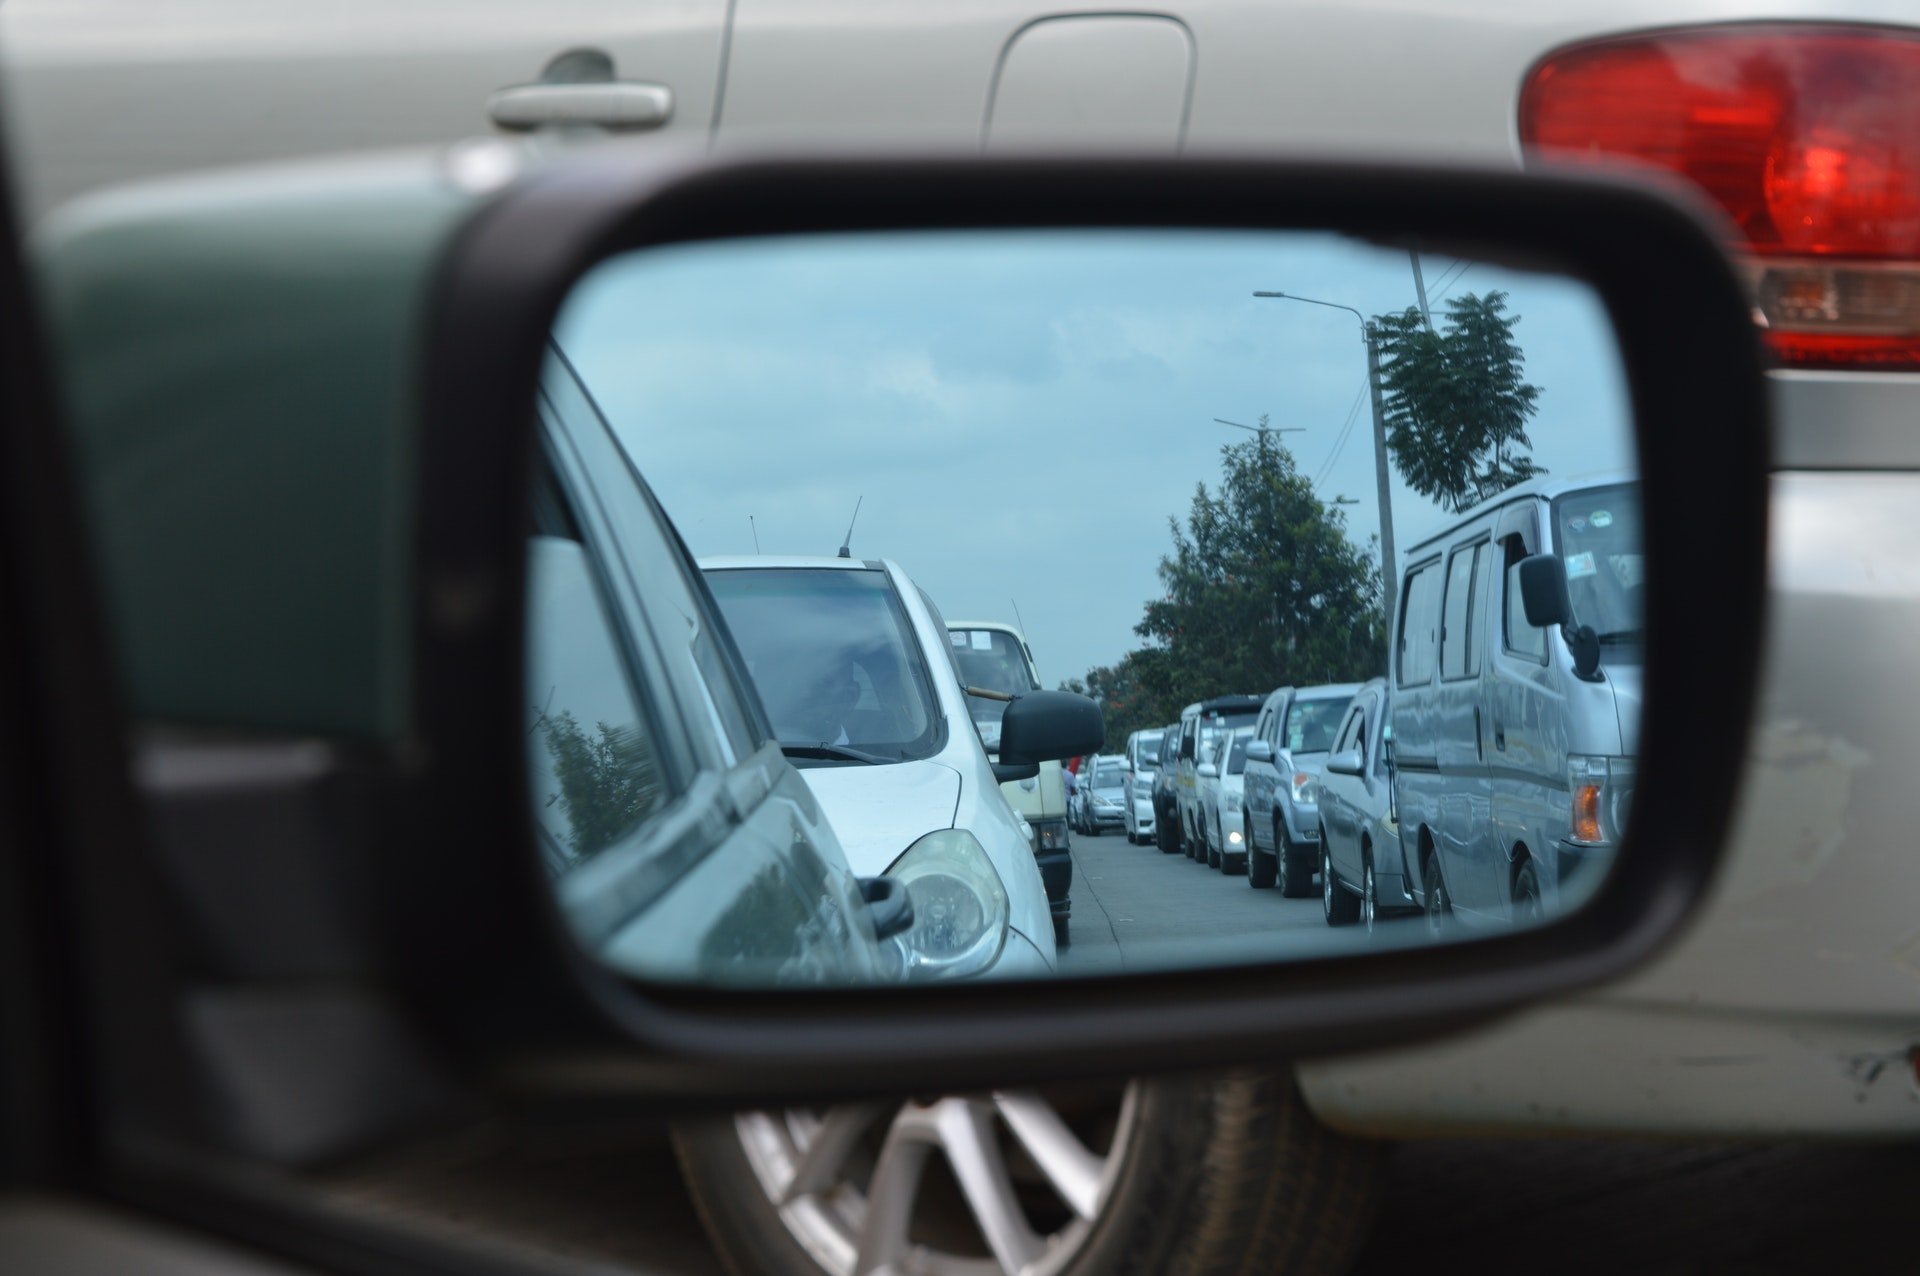 Queue of traffic in rear view car mirror